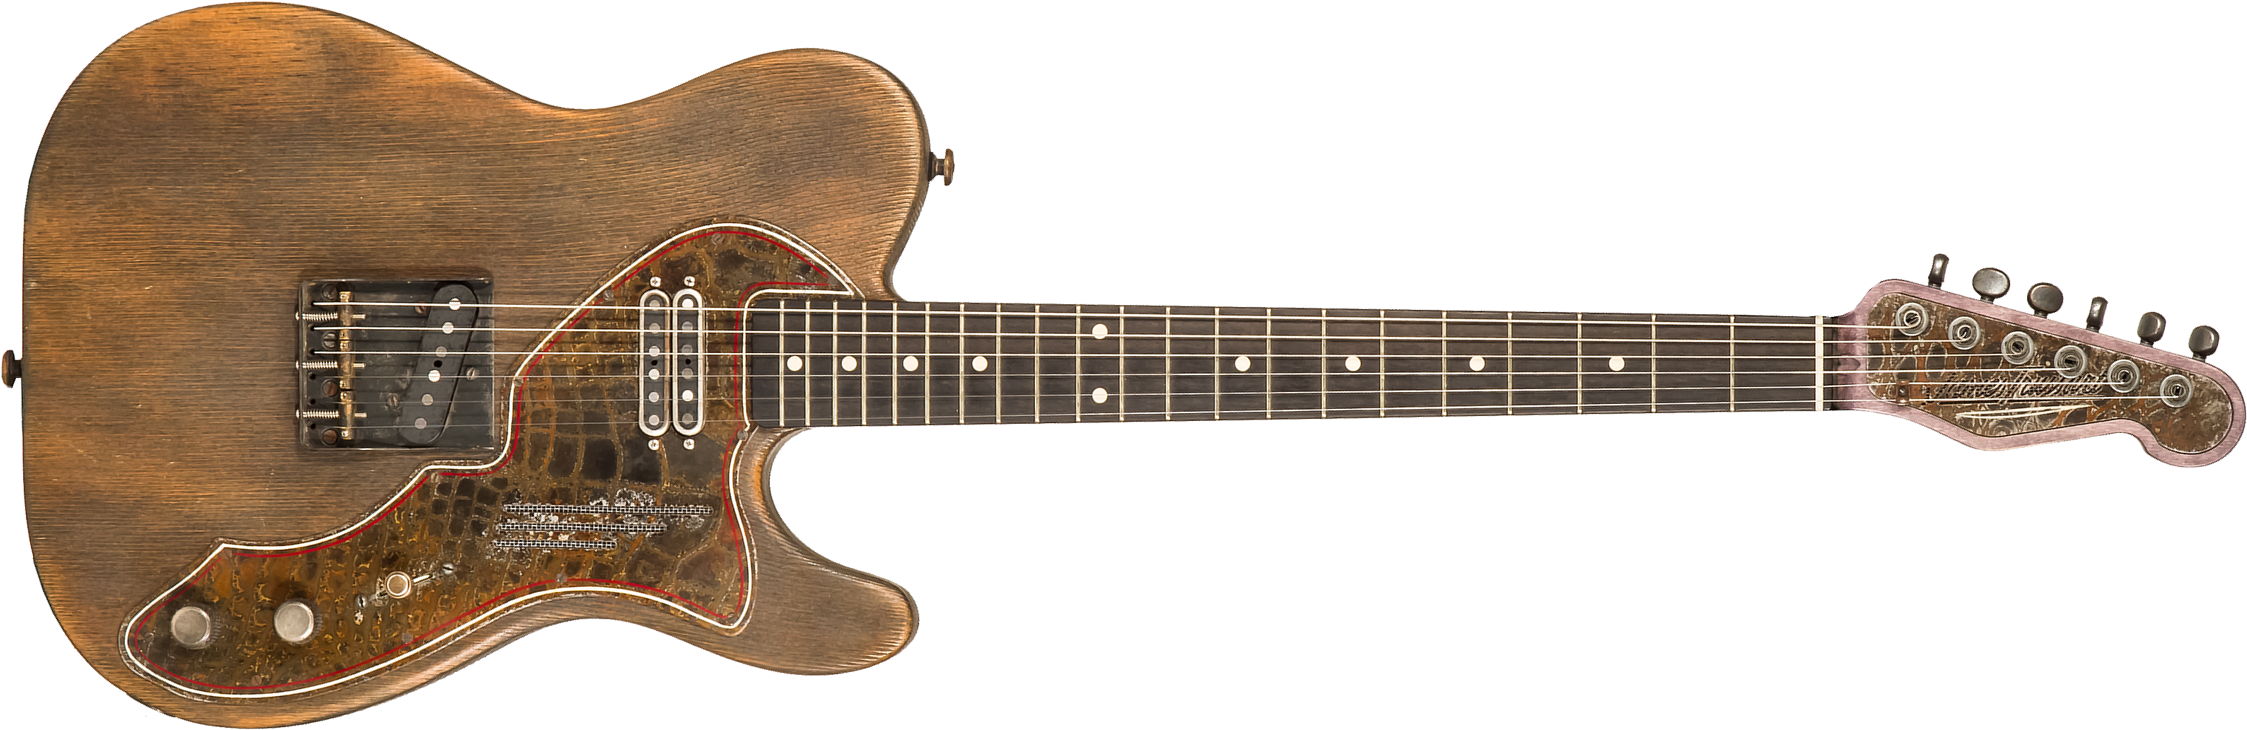 James Trussart Steelguard Caster Sugar Pine Sh Eb #18035 - Rust O Matic Gator Grey Driftwood - Guitare Électrique Forme Tel - Main picture